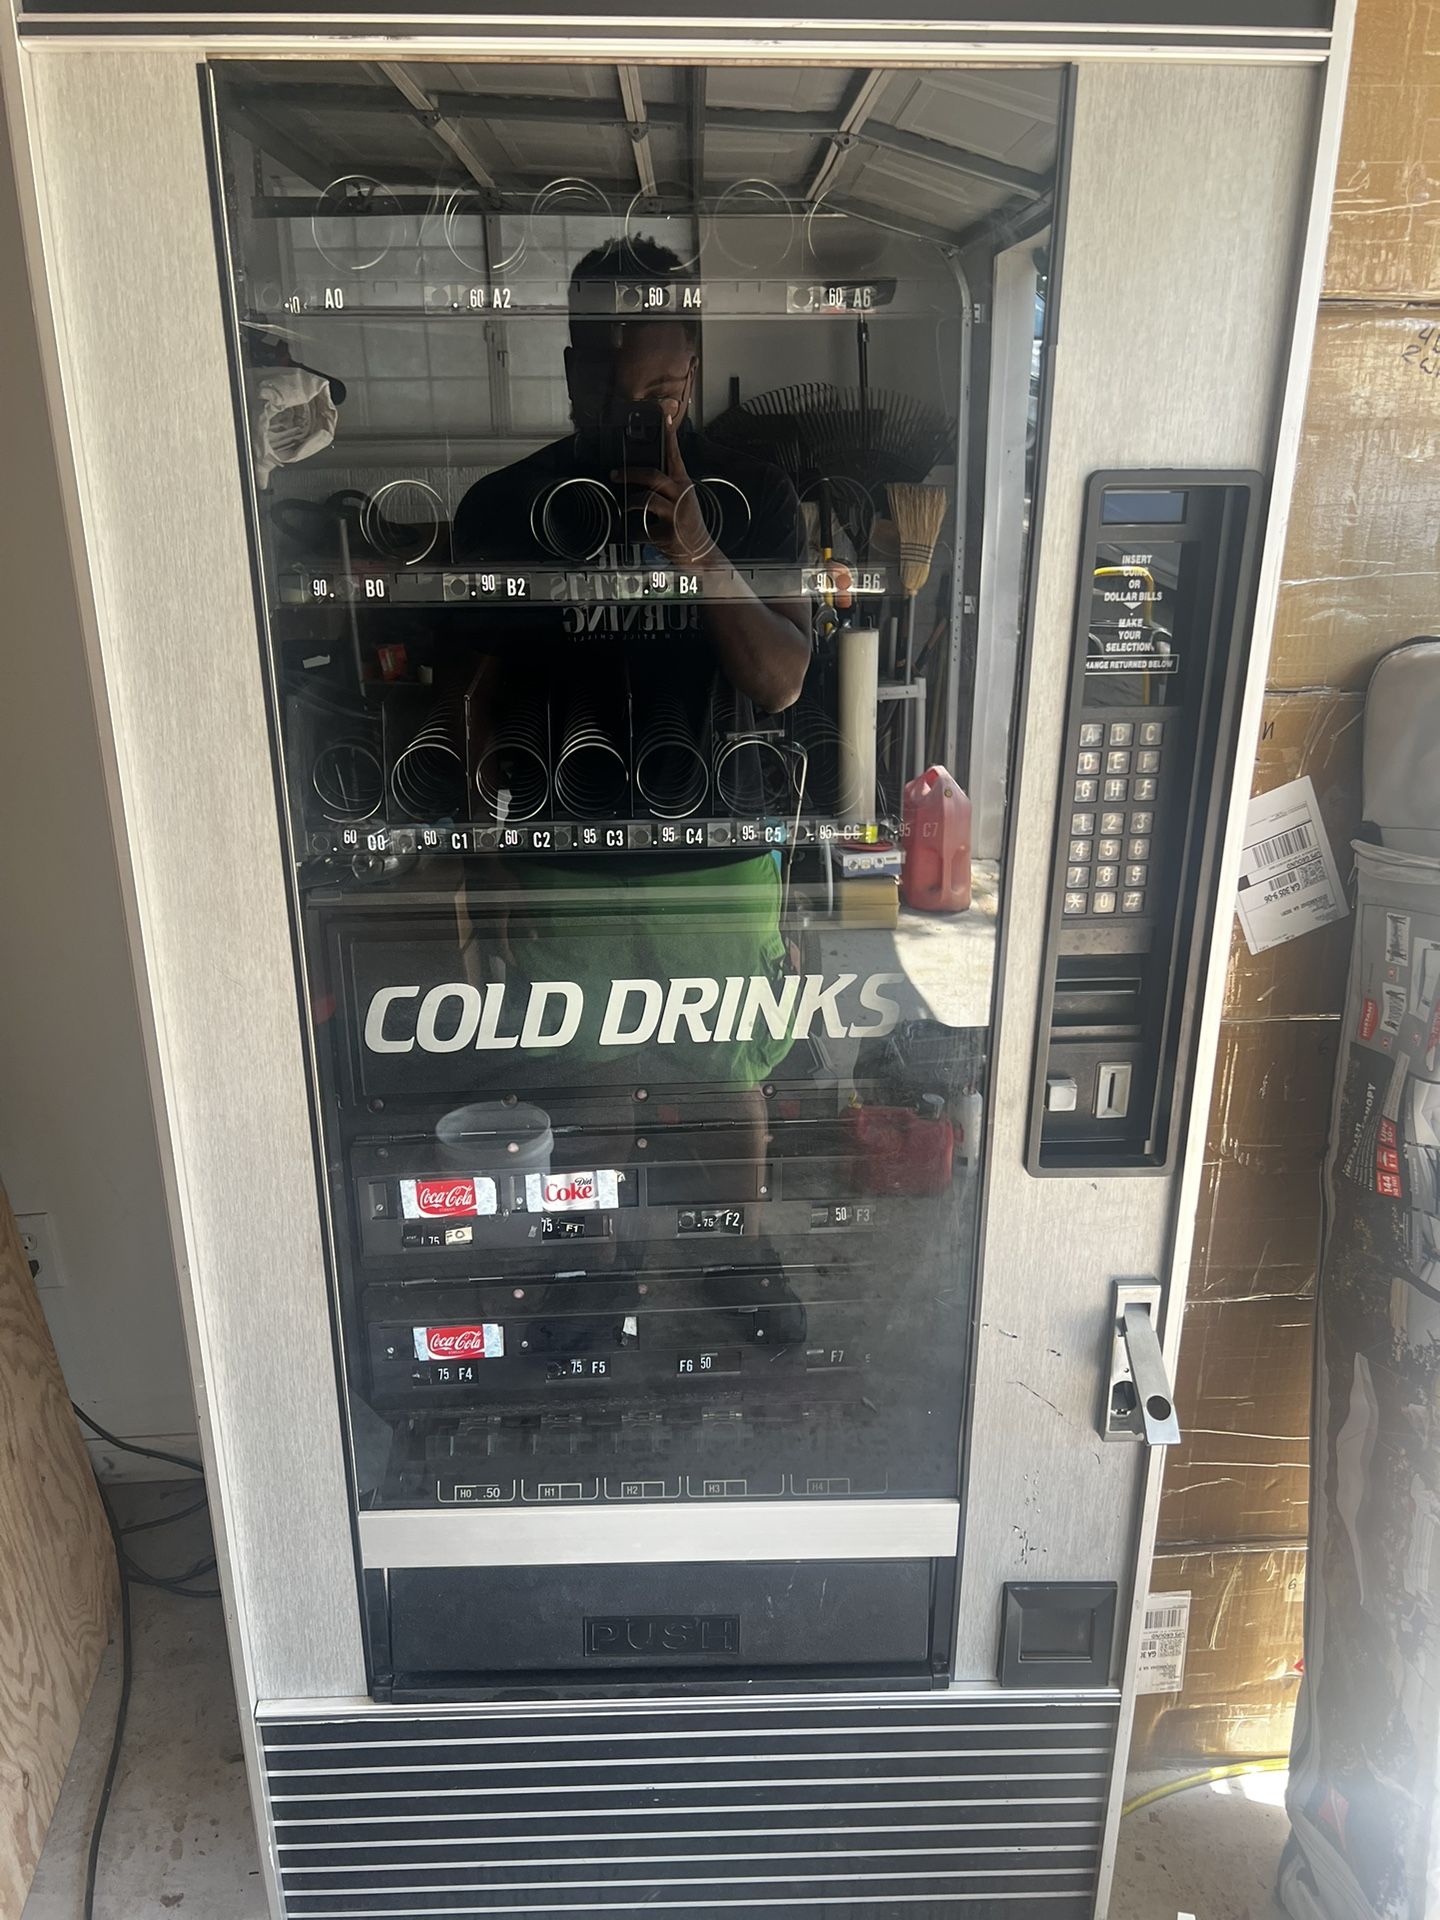 Combo Vending Machine